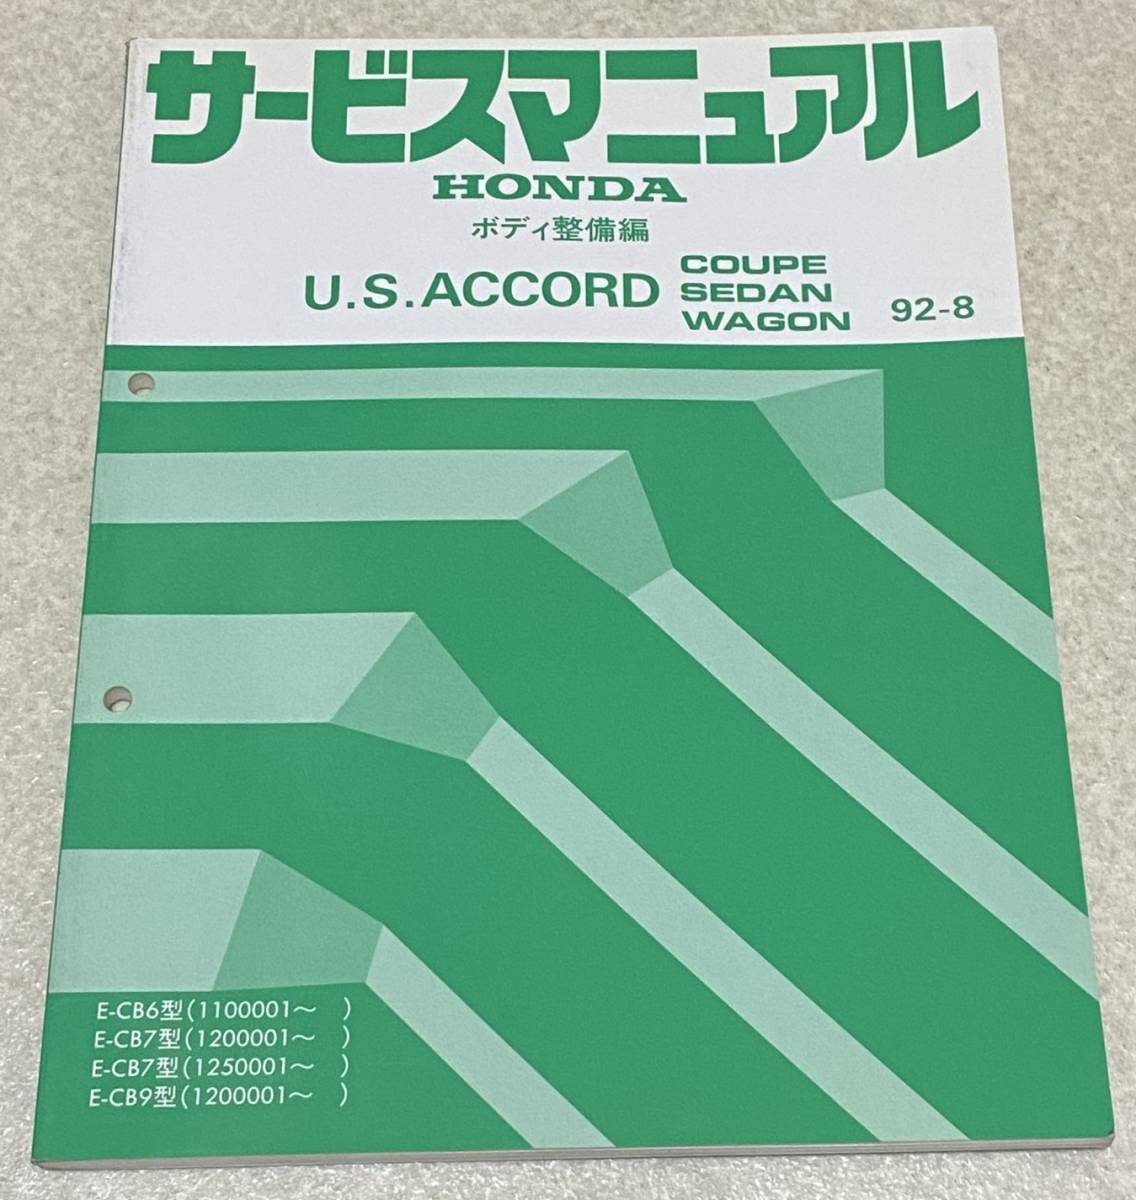 H6/ ホンダ U.S..アコード ボディ整備編 サービスマニュアル / 1992年8月 HONDA U.S.ACCORD COUPE SEDAN WAGON